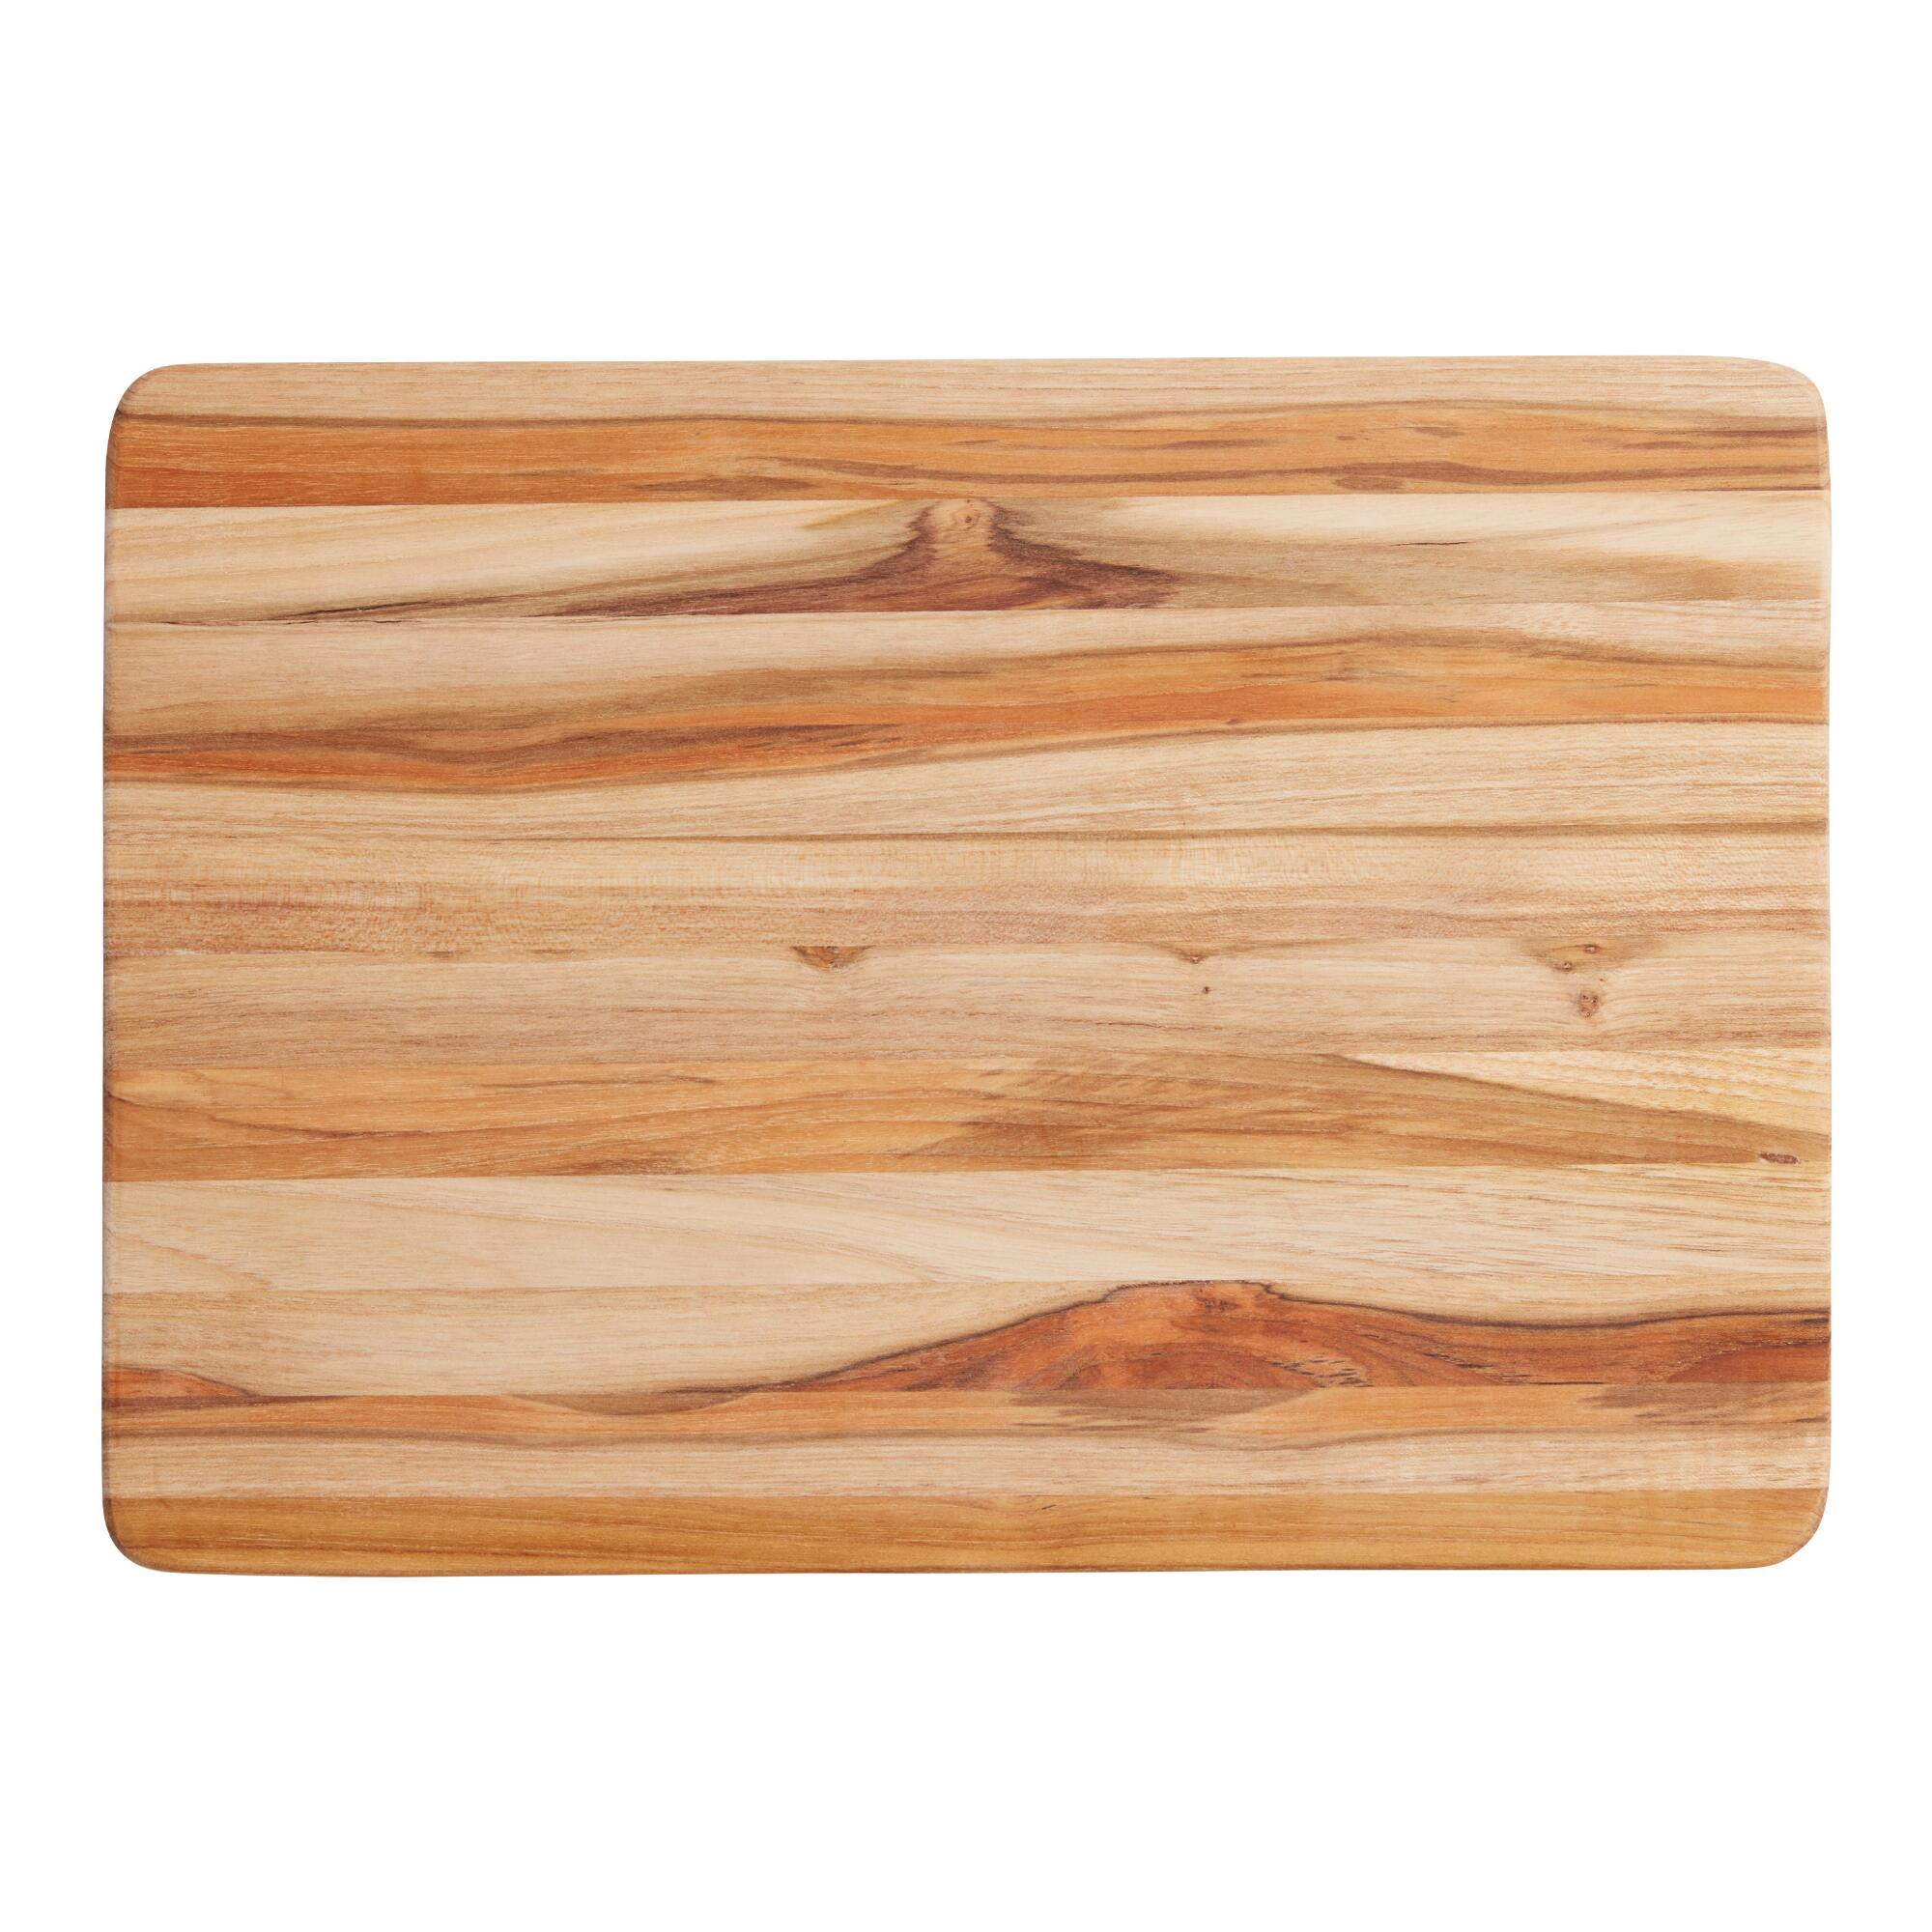 TeakHaus Edge Grain Wood Reversible Cutting Board: Brown by World Market